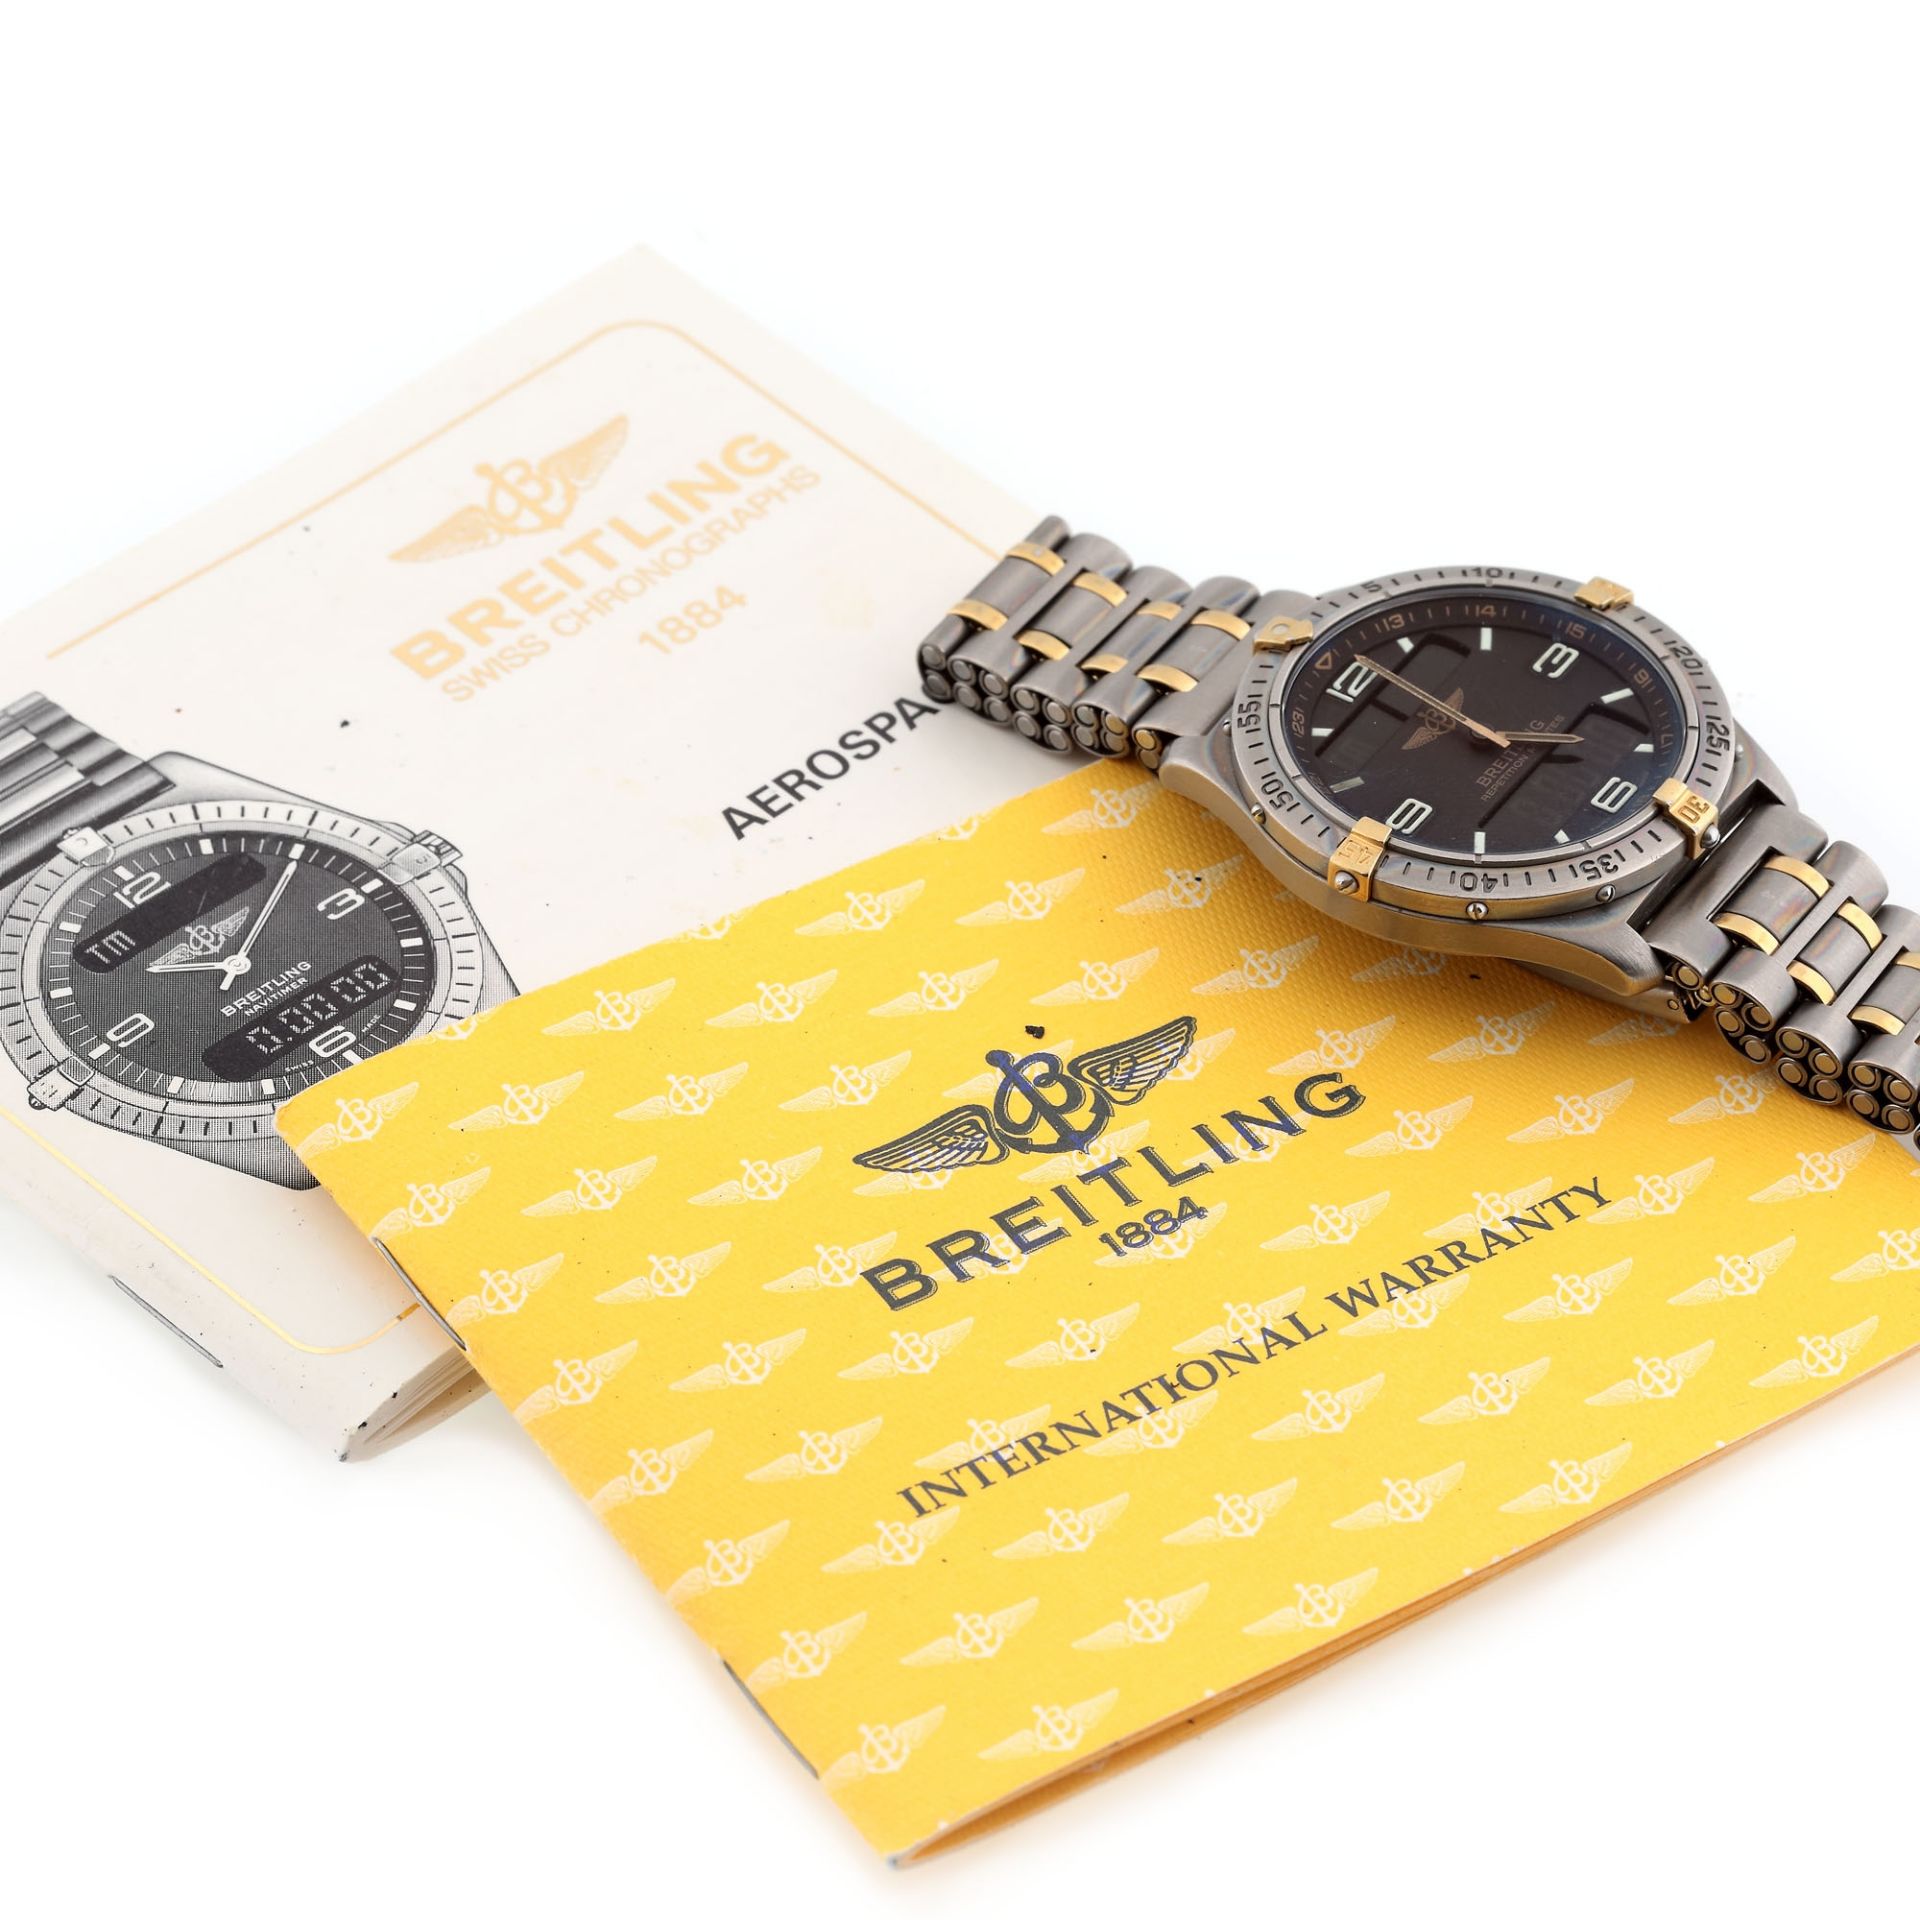 Breitling Aerospace wristwatch, titanium and gold, men, original box and provenance documents - Bild 3 aus 5